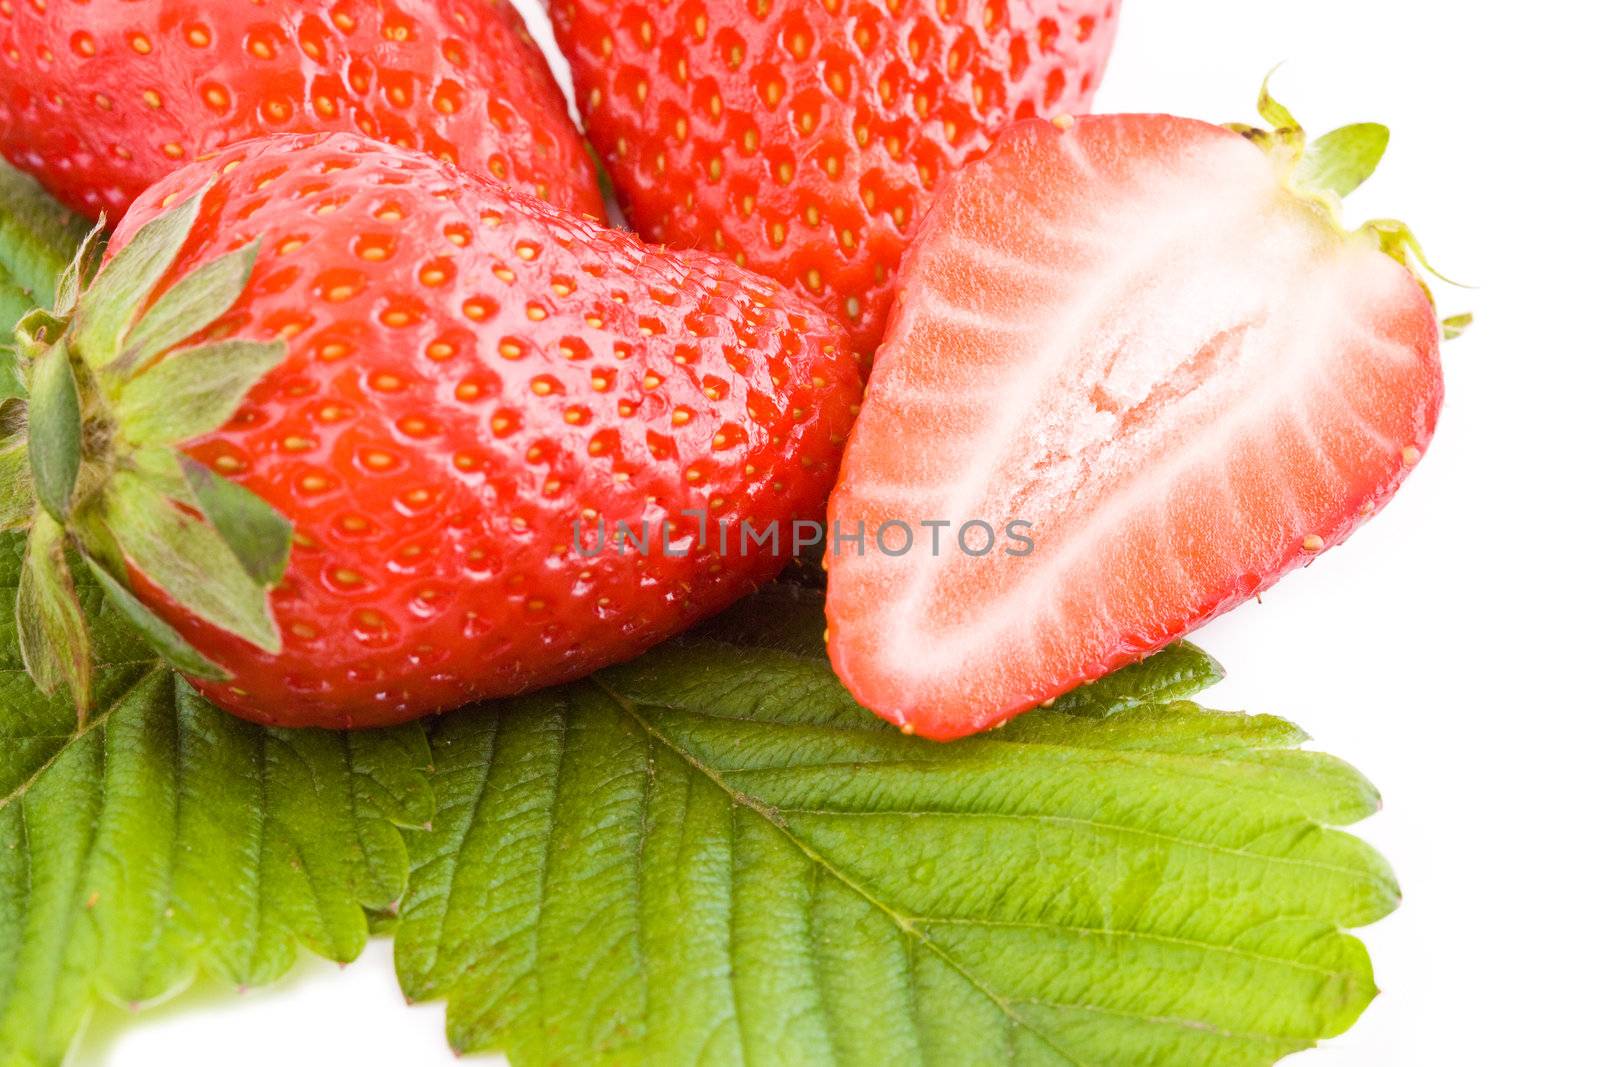 Strawberries closeup by Gbuglok